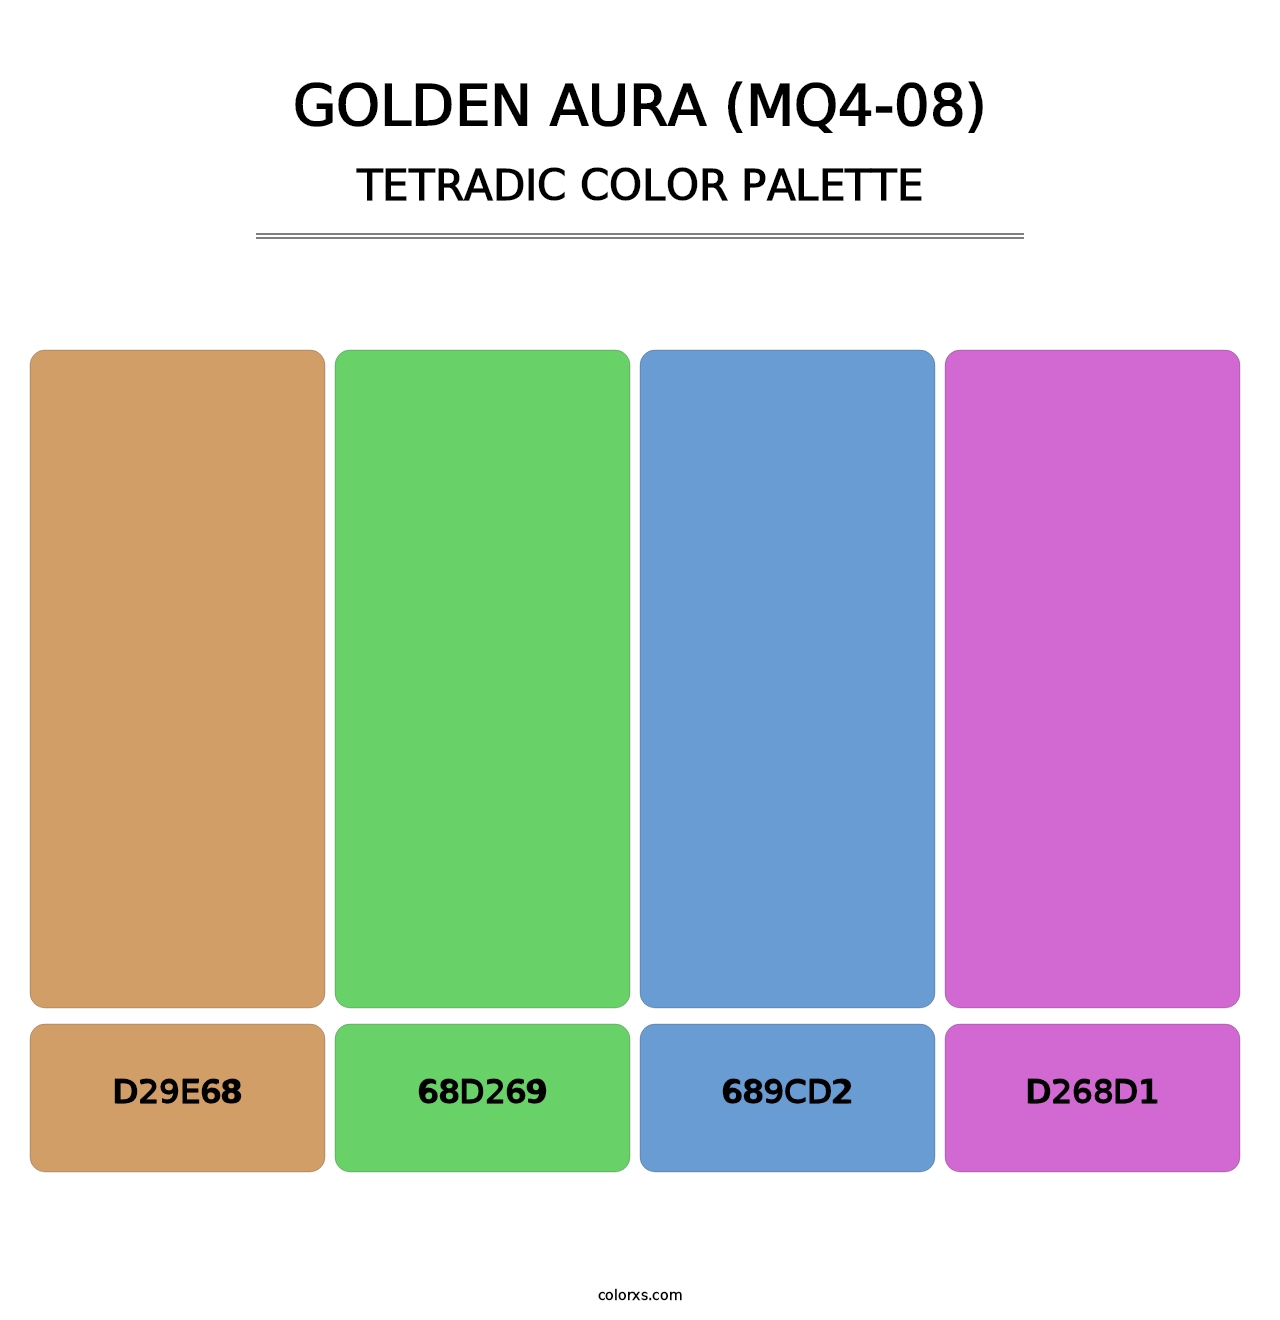 Golden Aura (MQ4-08) - Tetradic Color Palette